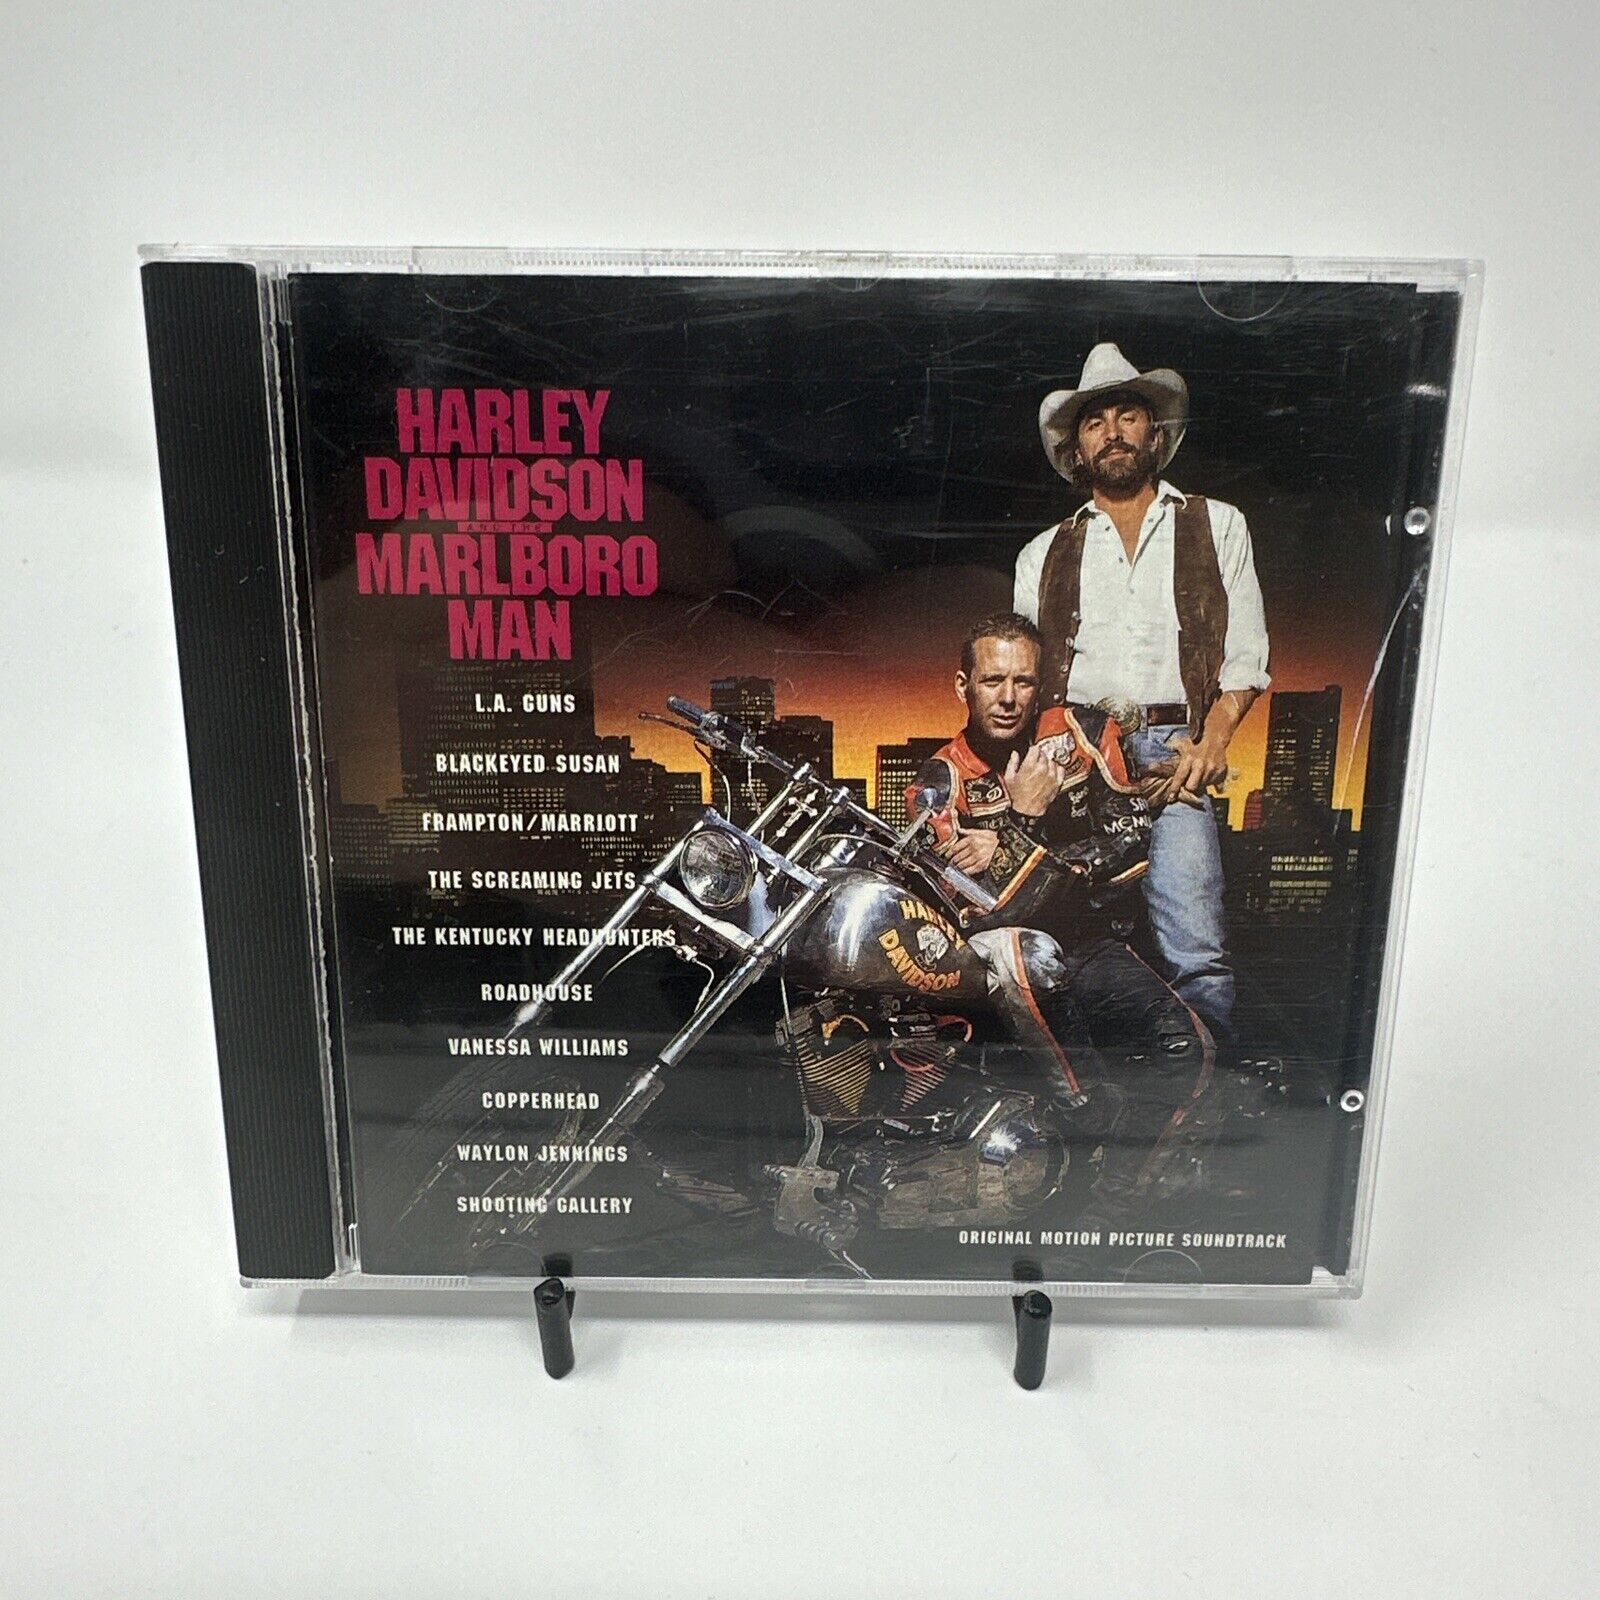 Harley Davidson & the Marlboro Man by Original Soundtrack (CD, Oct-1991, Mercury